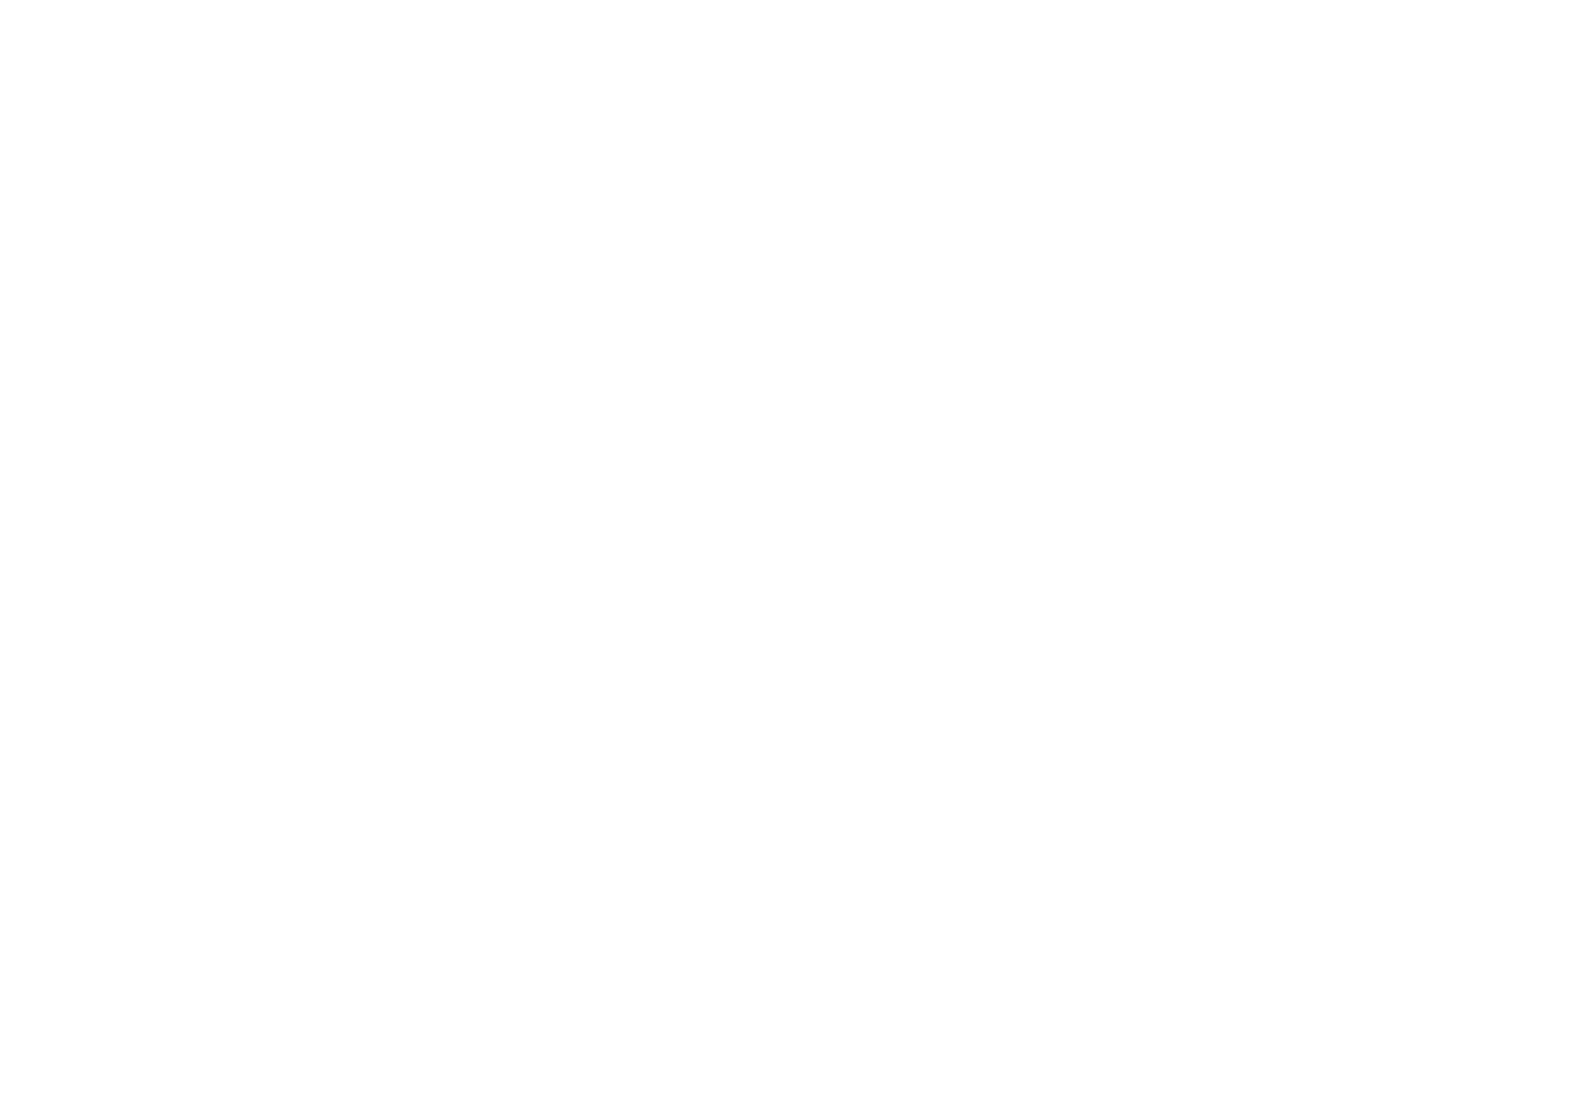 Tri Pointe Homes logo for dark backgrounds (transparent PNG)